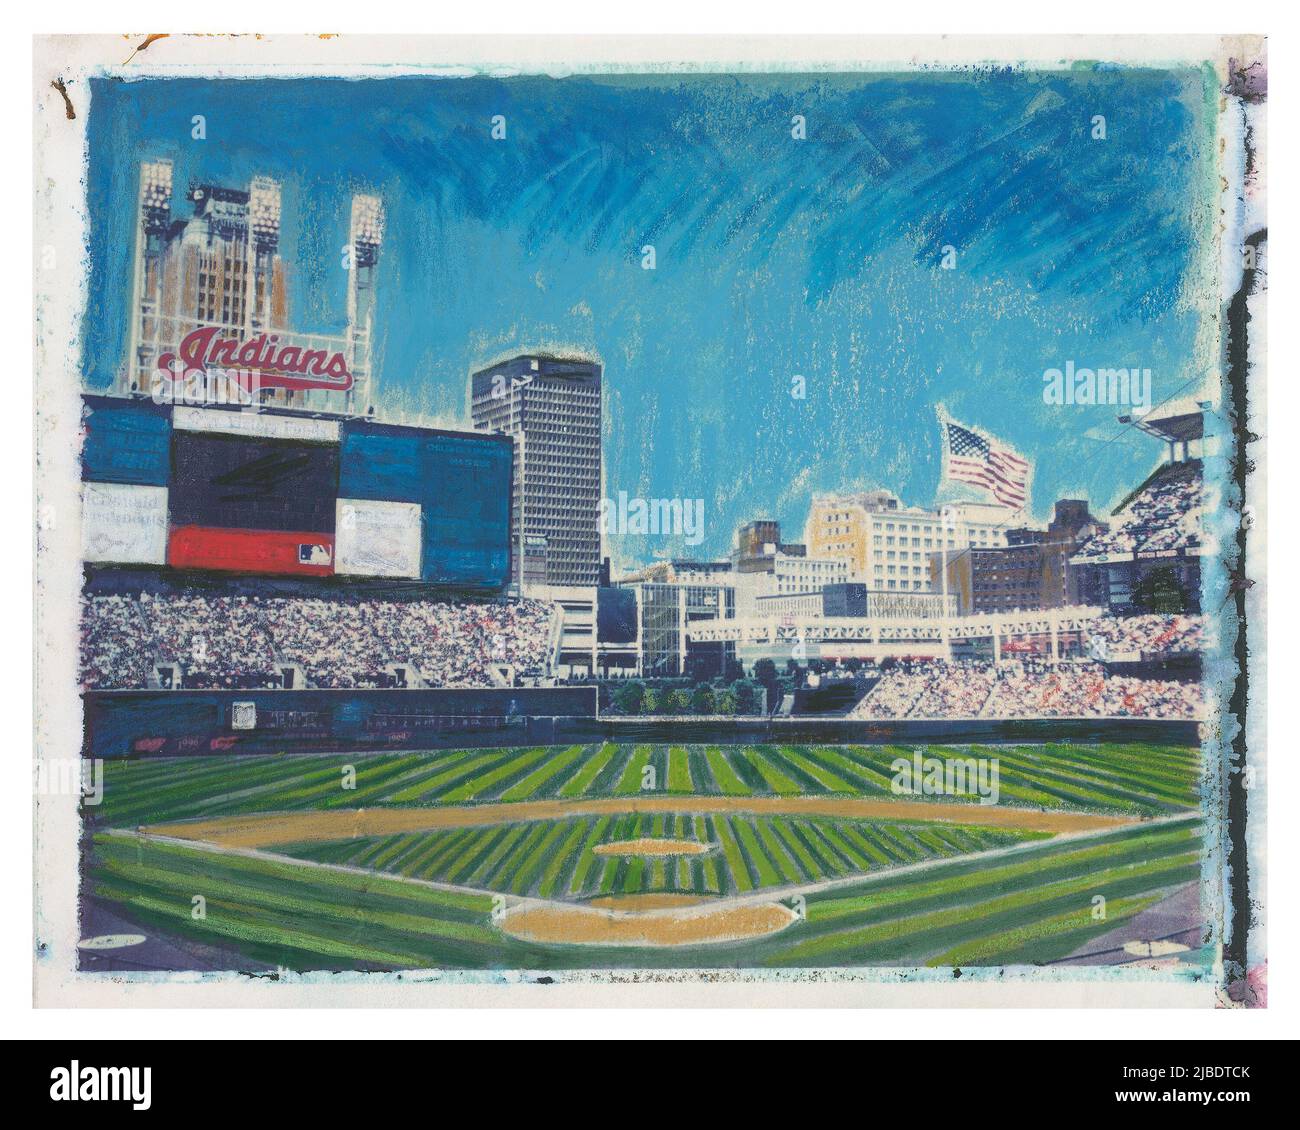 MLB Cleveland Indians Ballpark Stock Photo